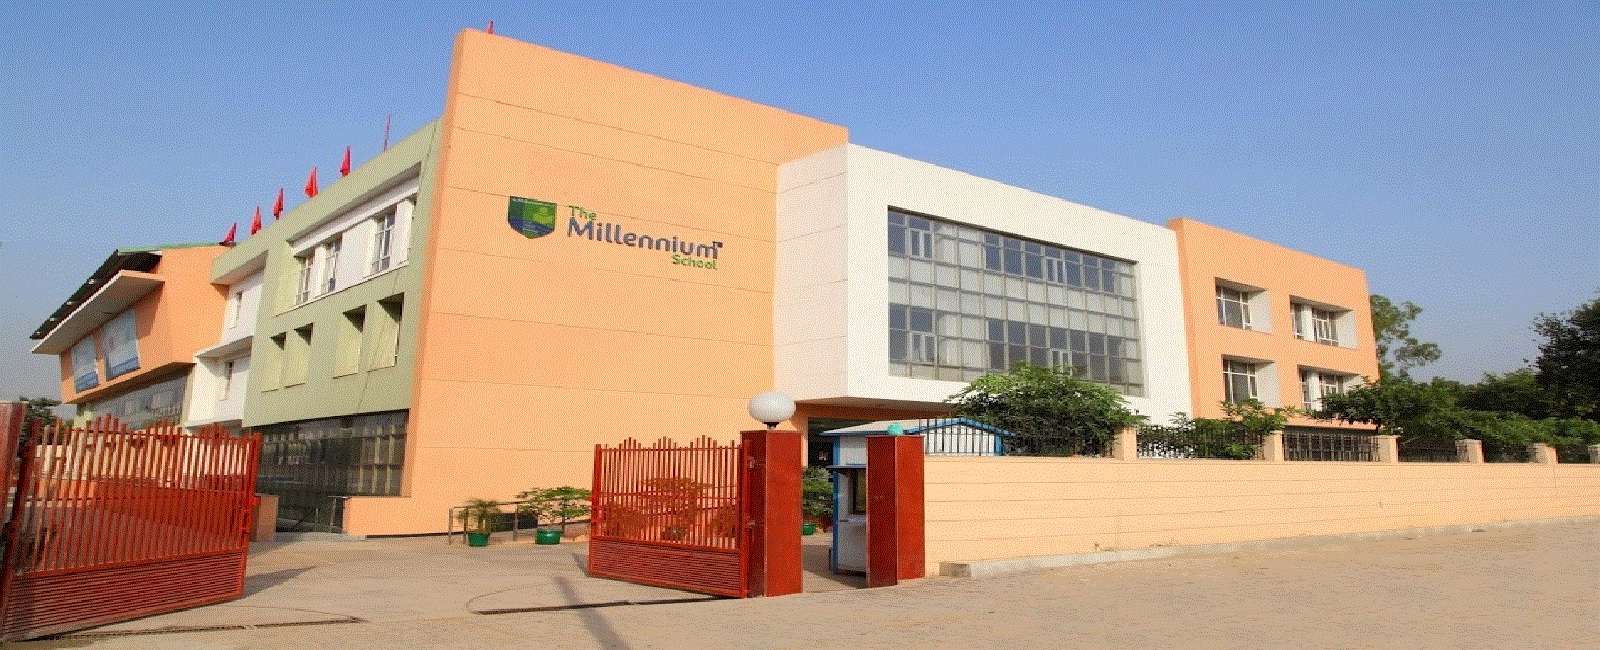 The Millennium School Gurgaon,  Sector 38